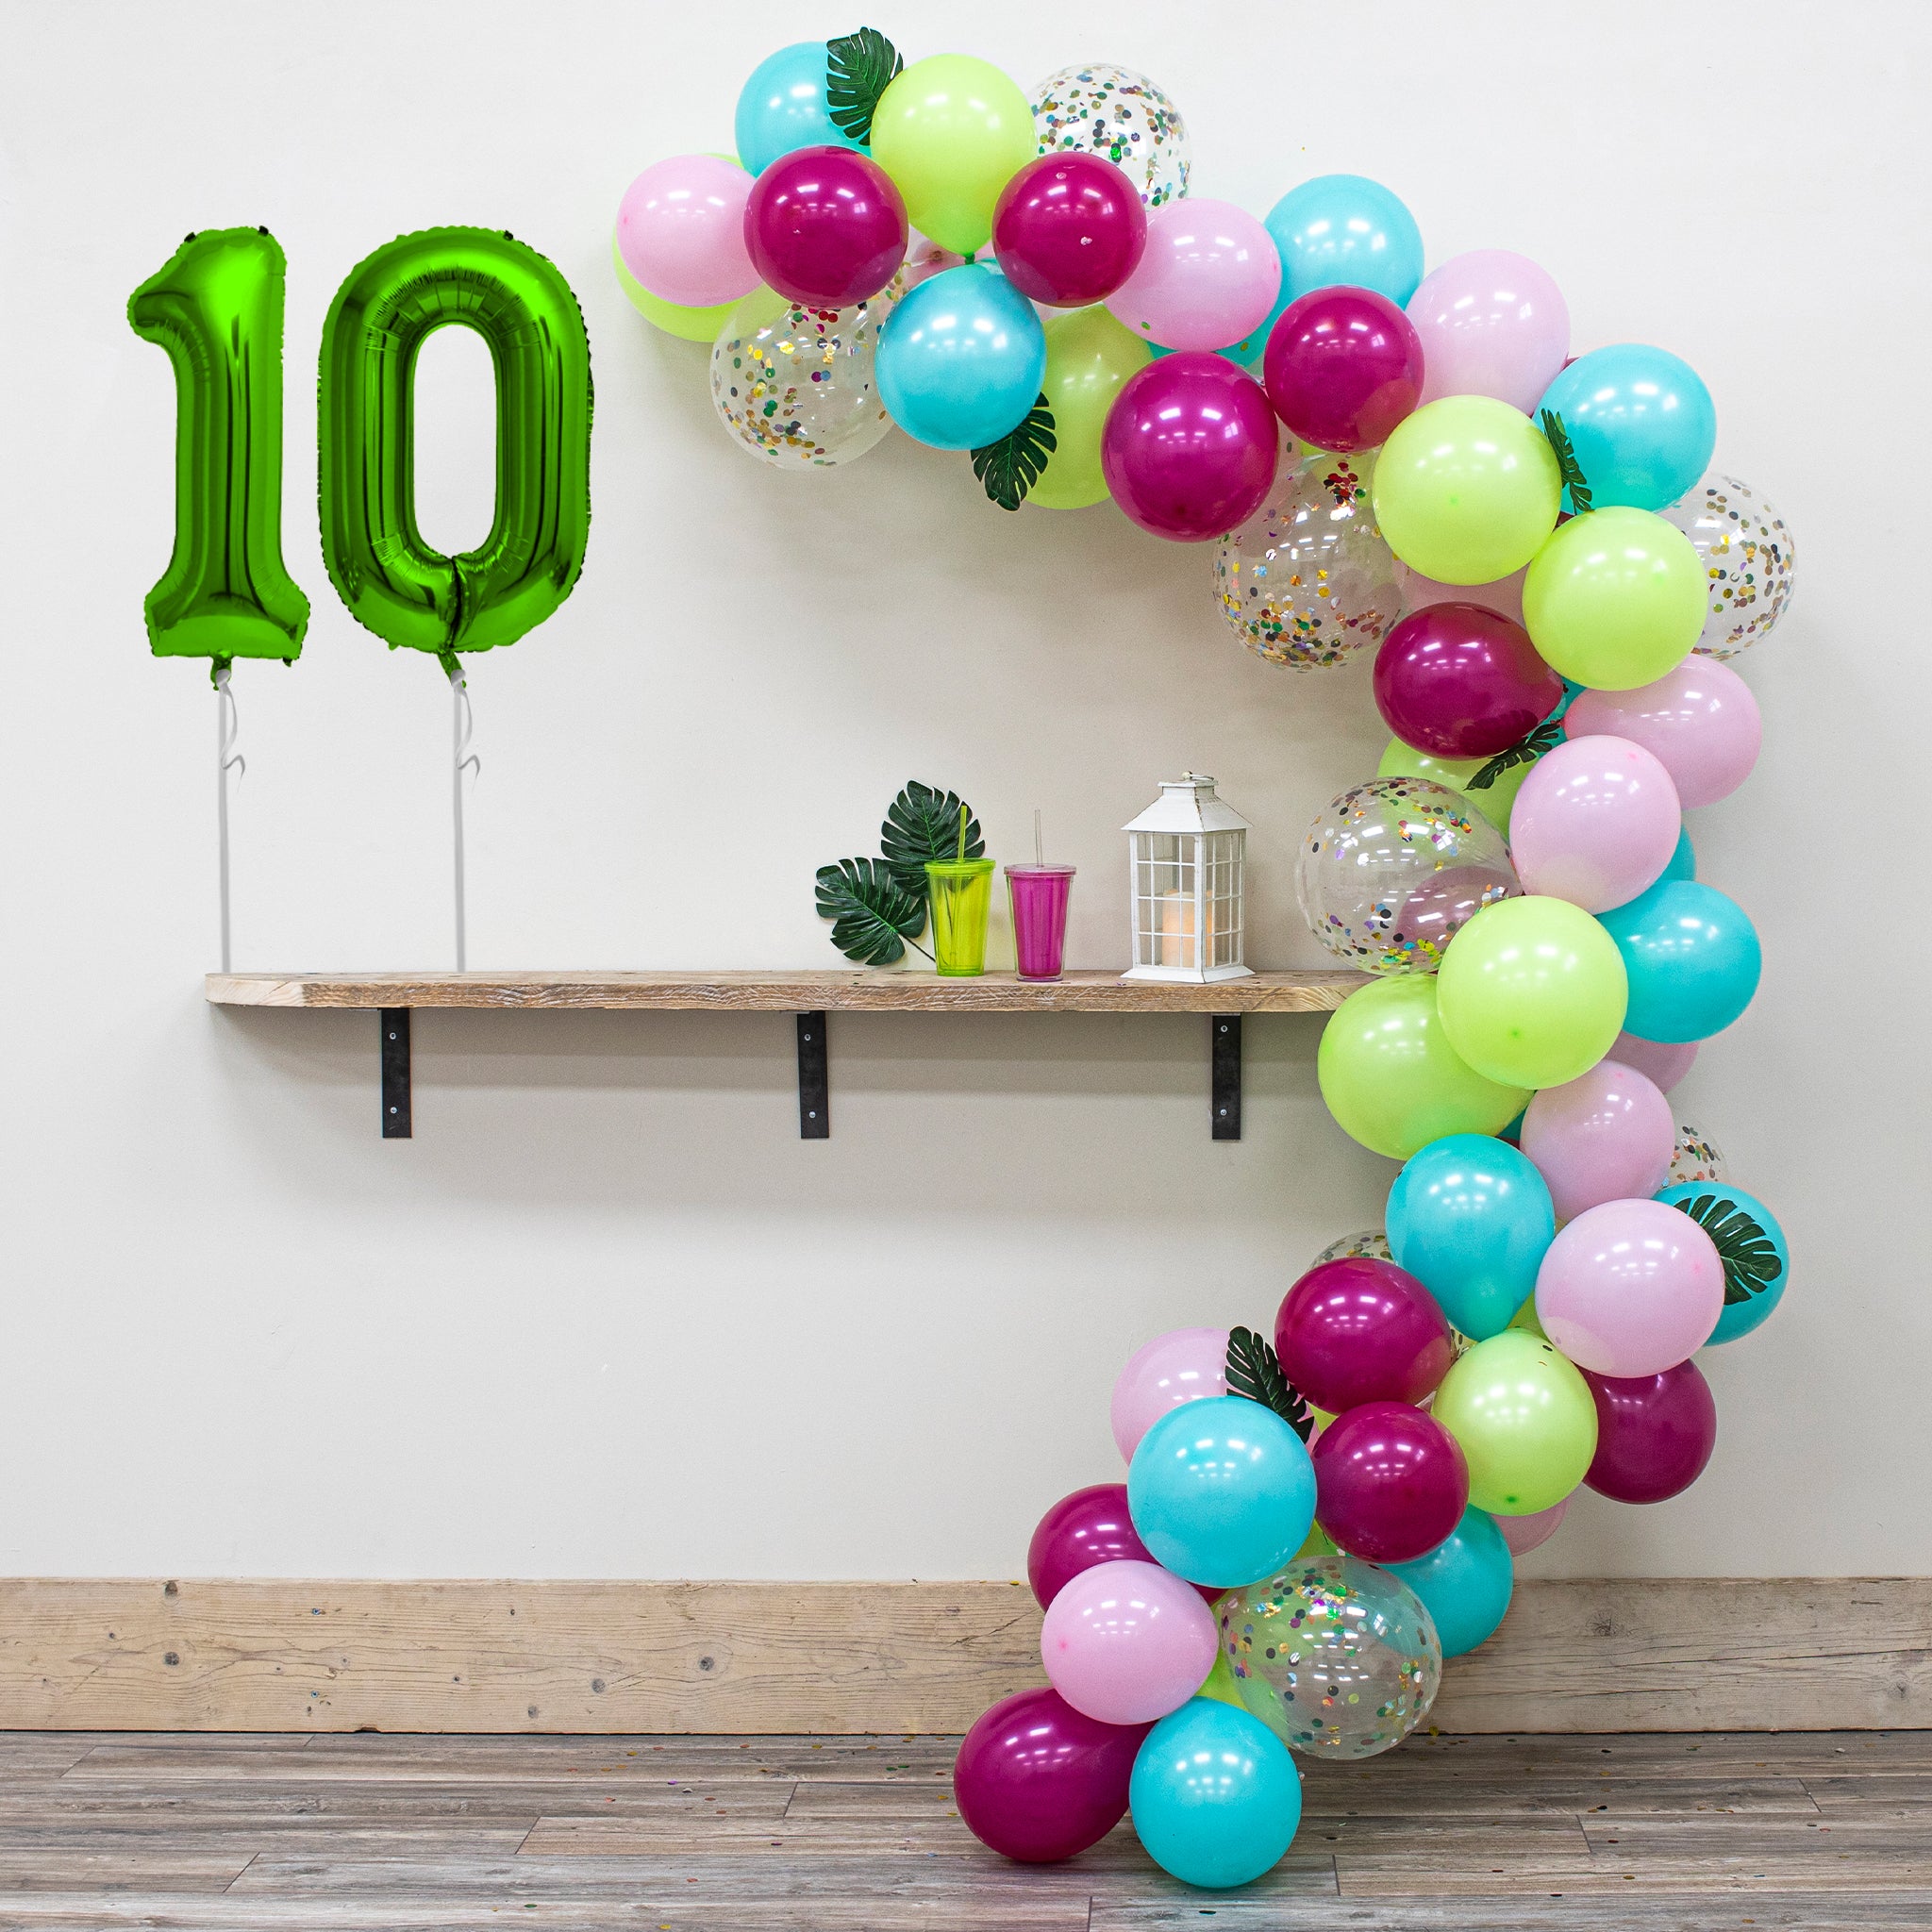 10th Birthday Hawaiian Tiki Party Balloon Arch Decoration Kit - Includes 70+ Balloons